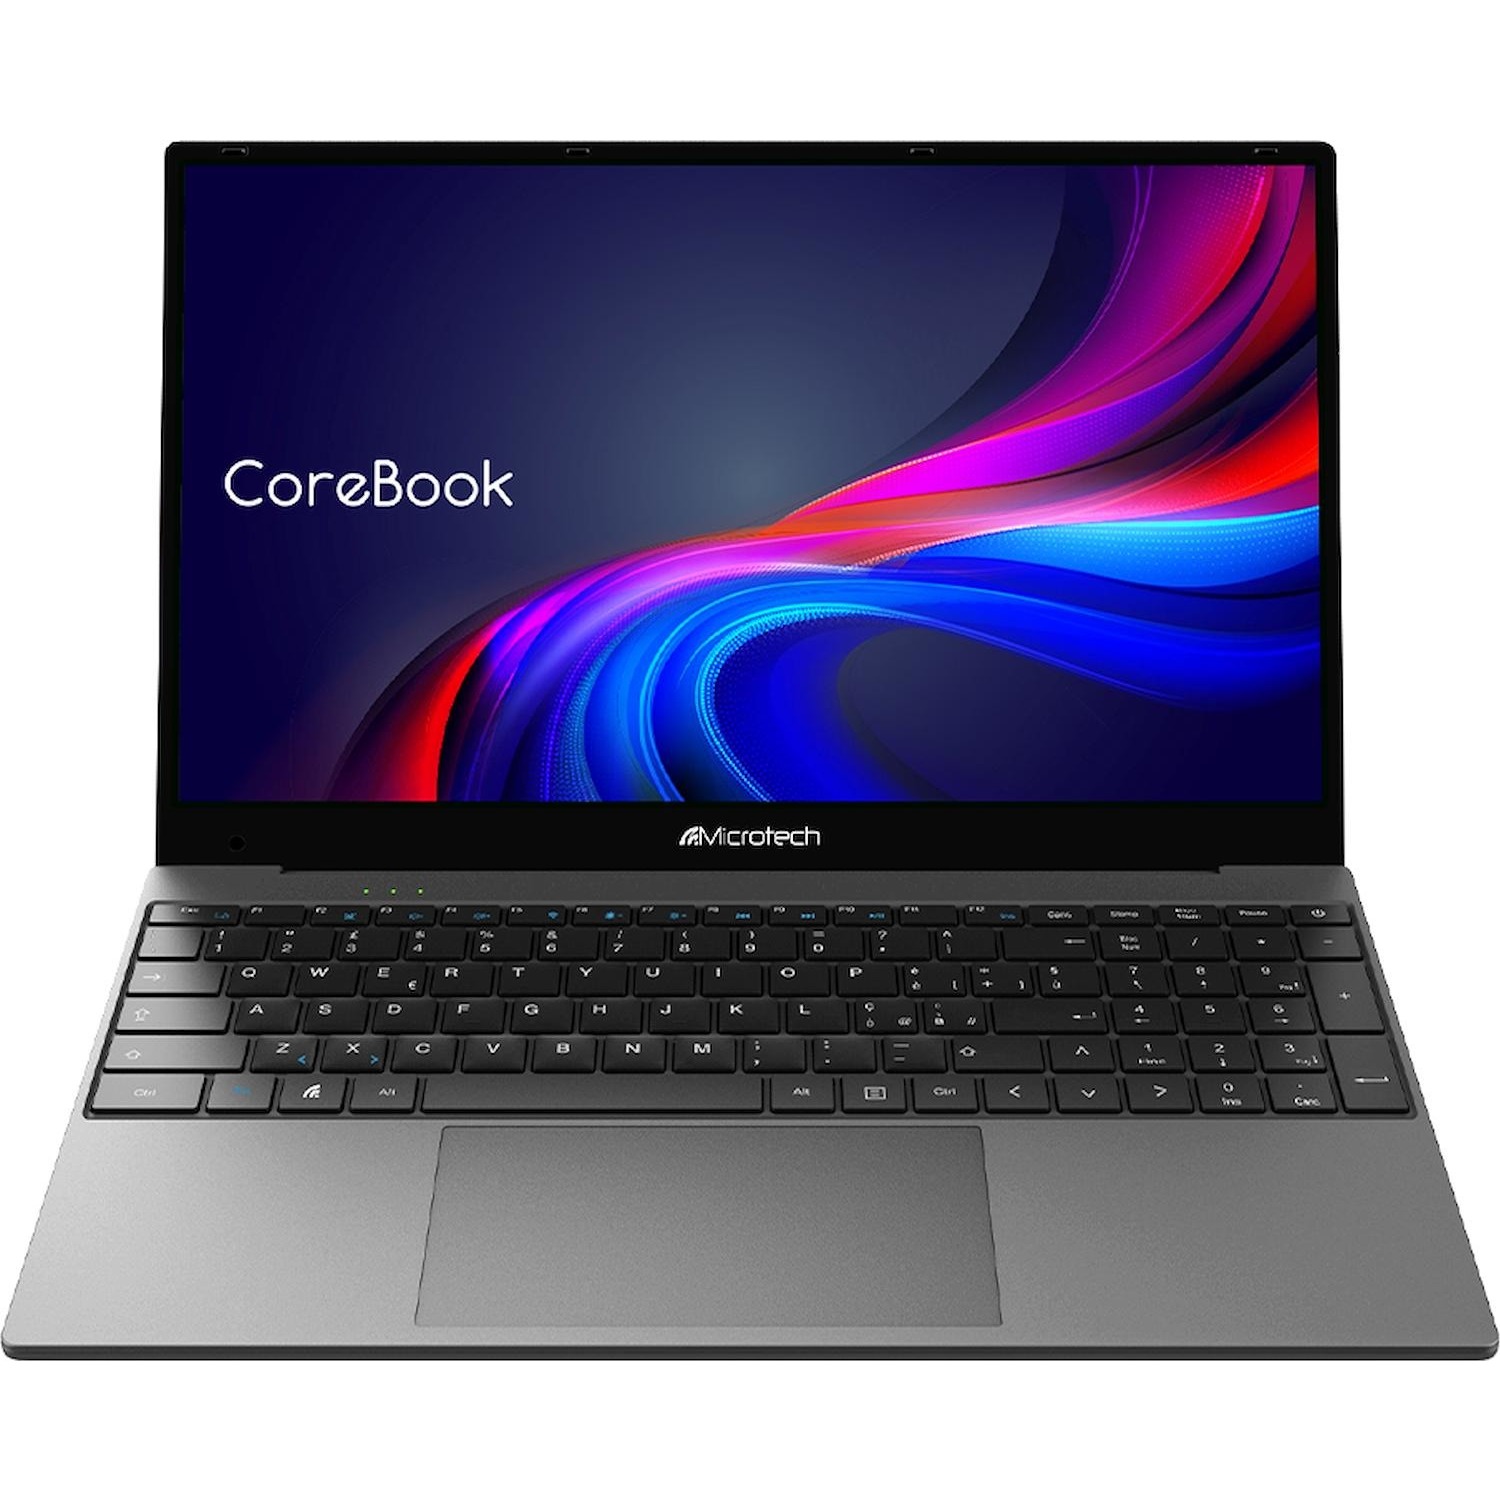 Immagine per Notebook Microtech CoreBook CB15SH35/8256W1       grigio da DIMOStore